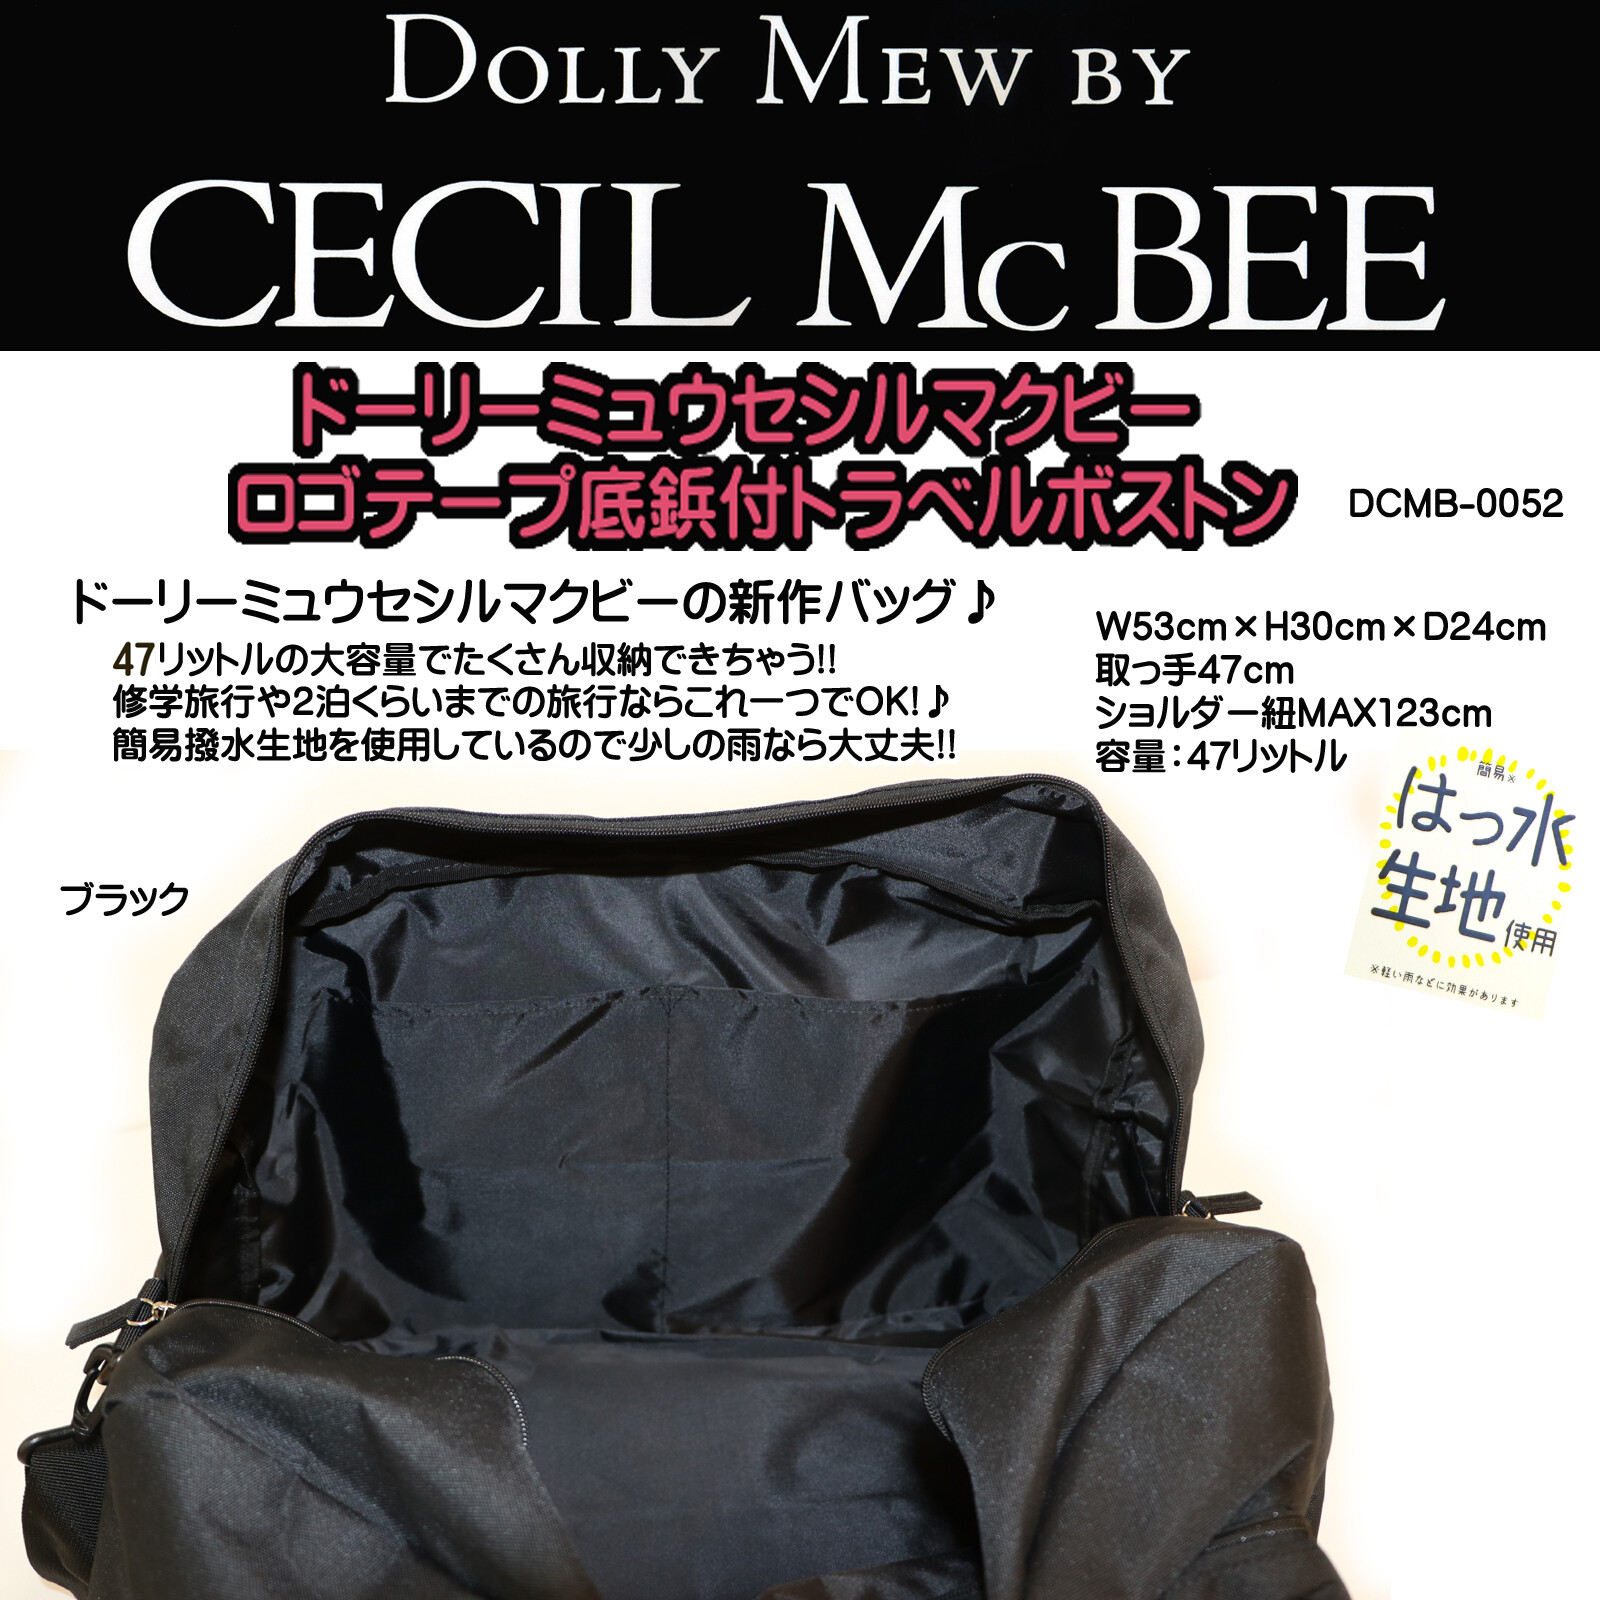 Dolly Mew By Cecil Mcbee ロゴテープ底鋲付トラベルボストンの商品ページ 卸 仕入れサイト スーパーデリバリー